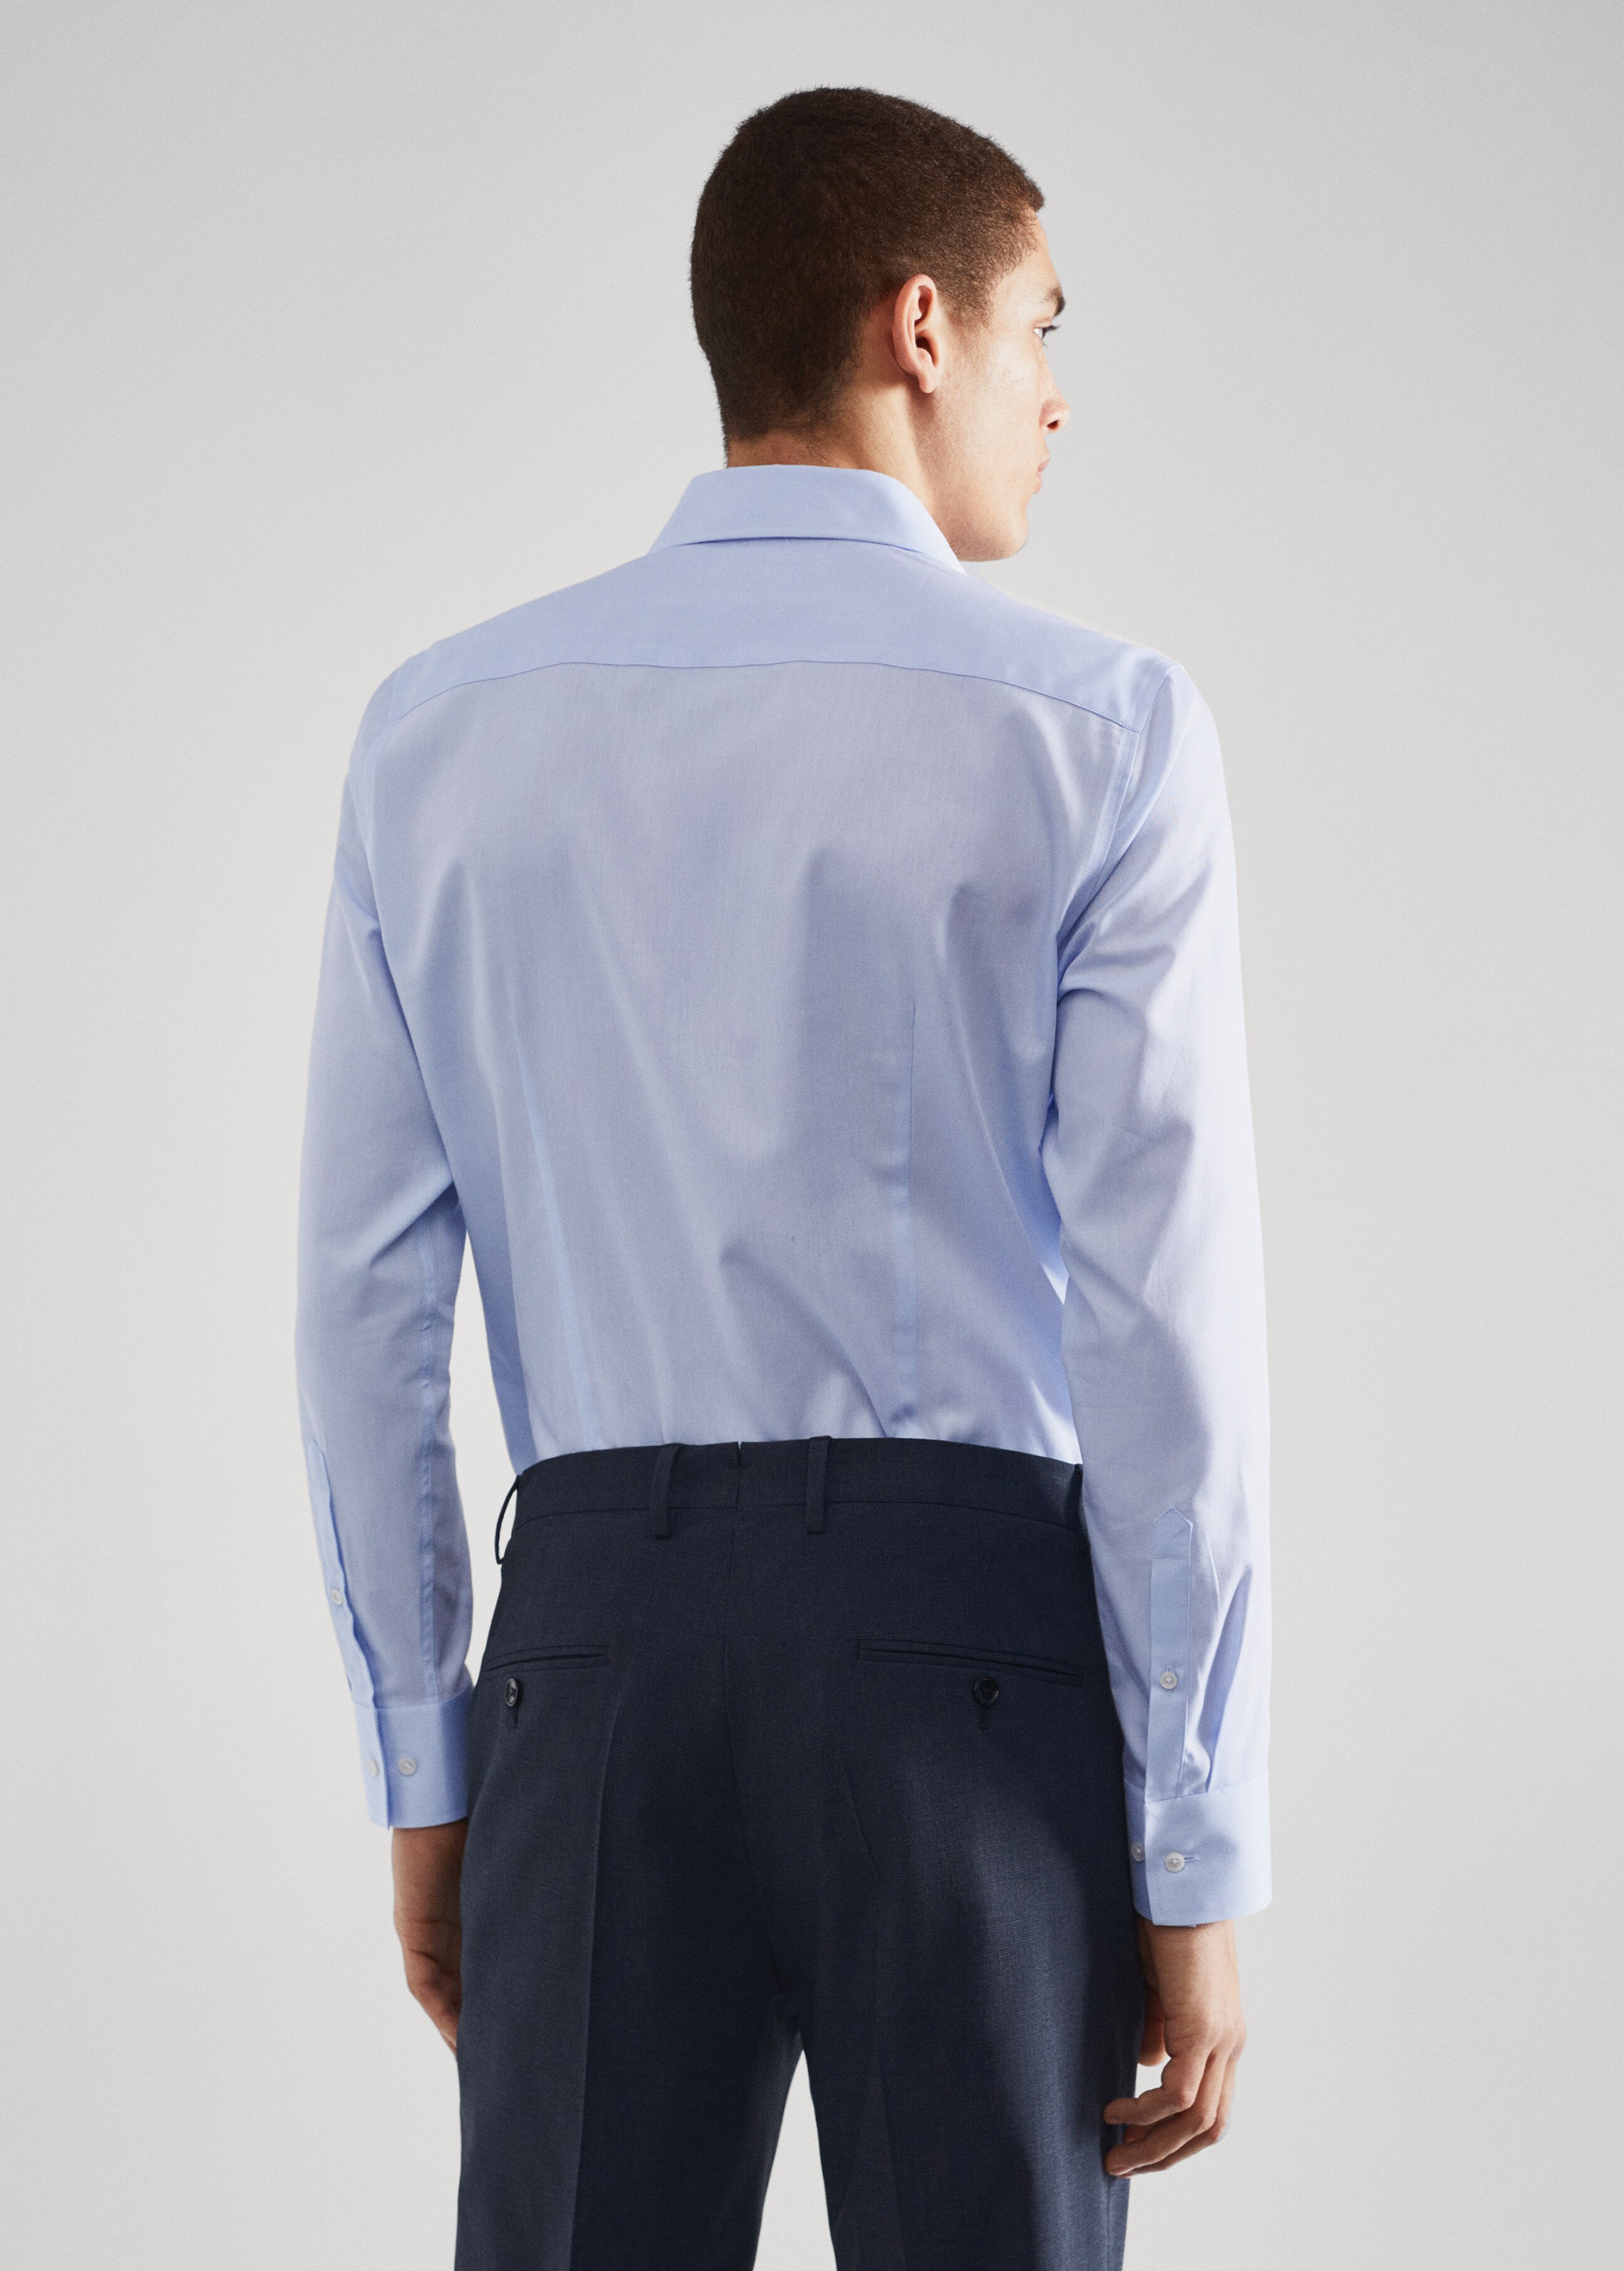 Slim fit cotton suit shirt - Reverse of the article